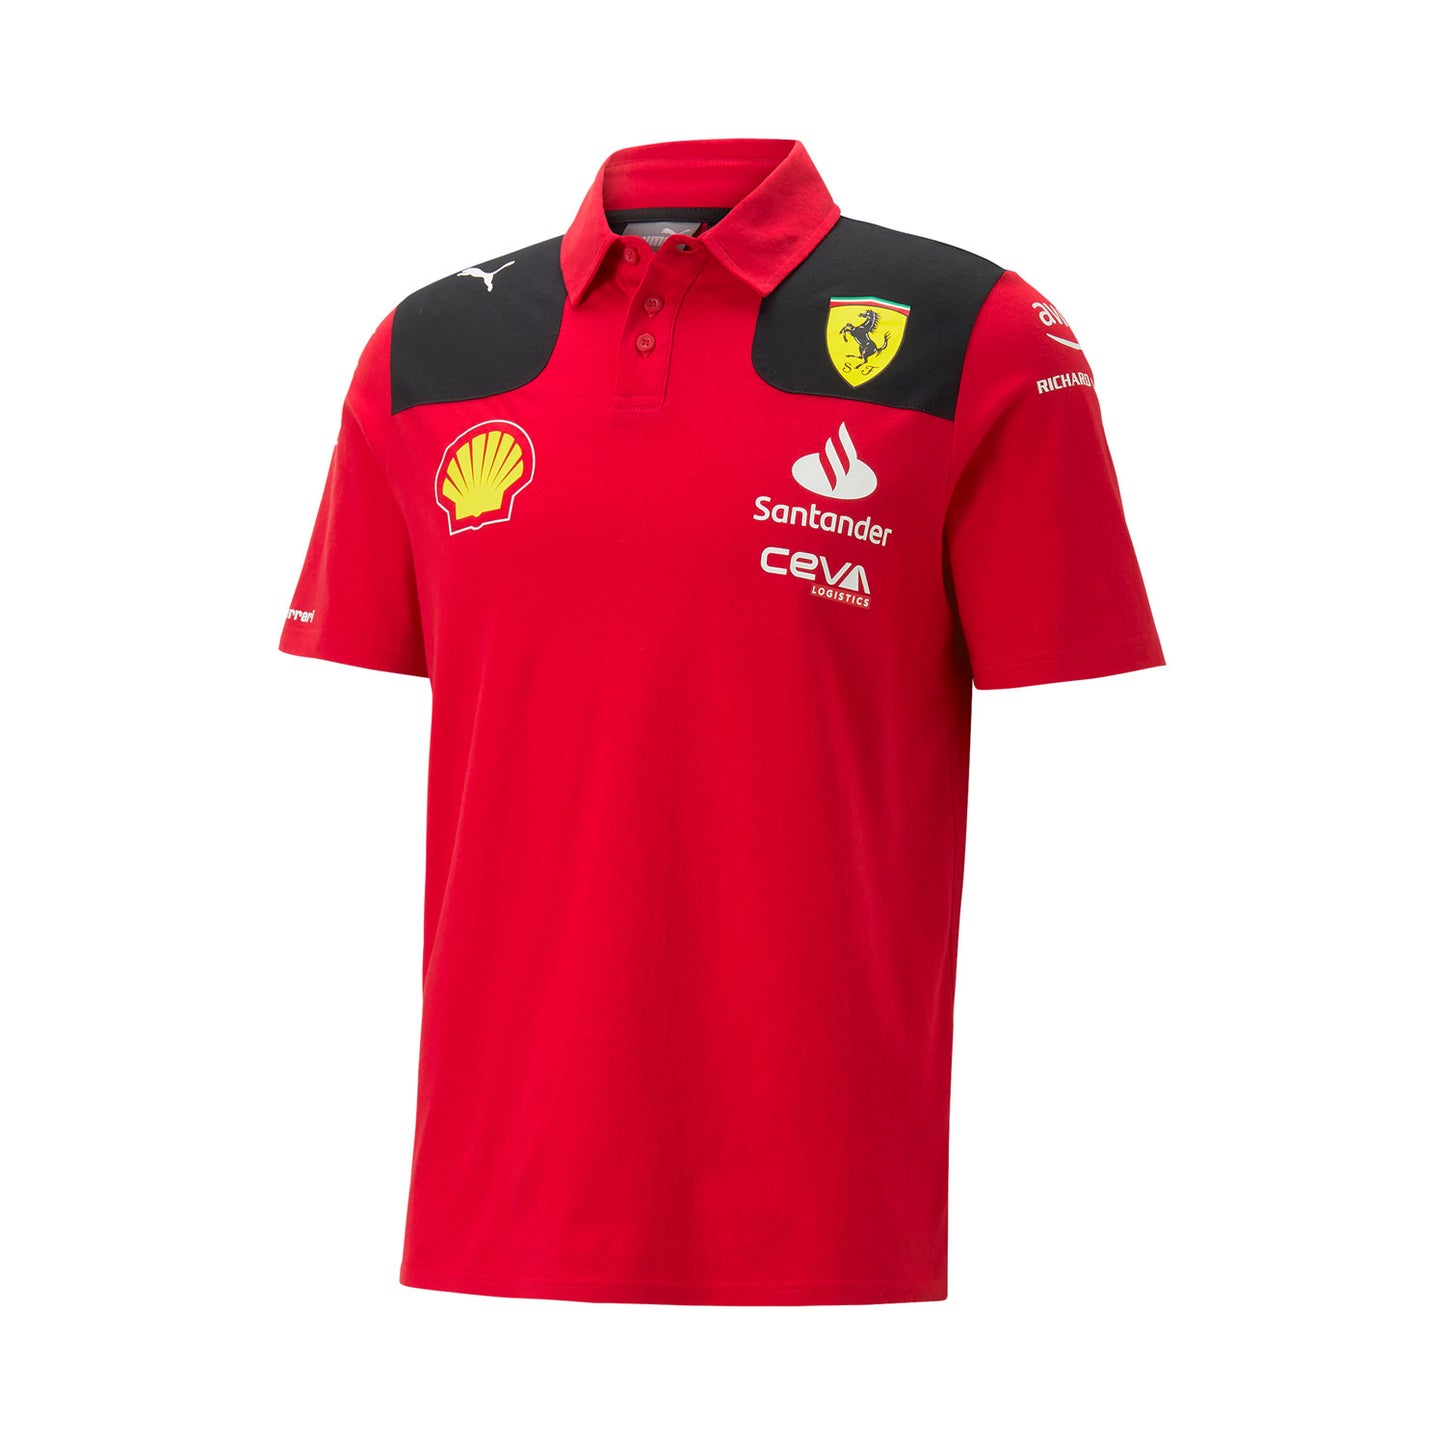 2023 Ferrari Italy F1 Mens Team Polo Shirt red